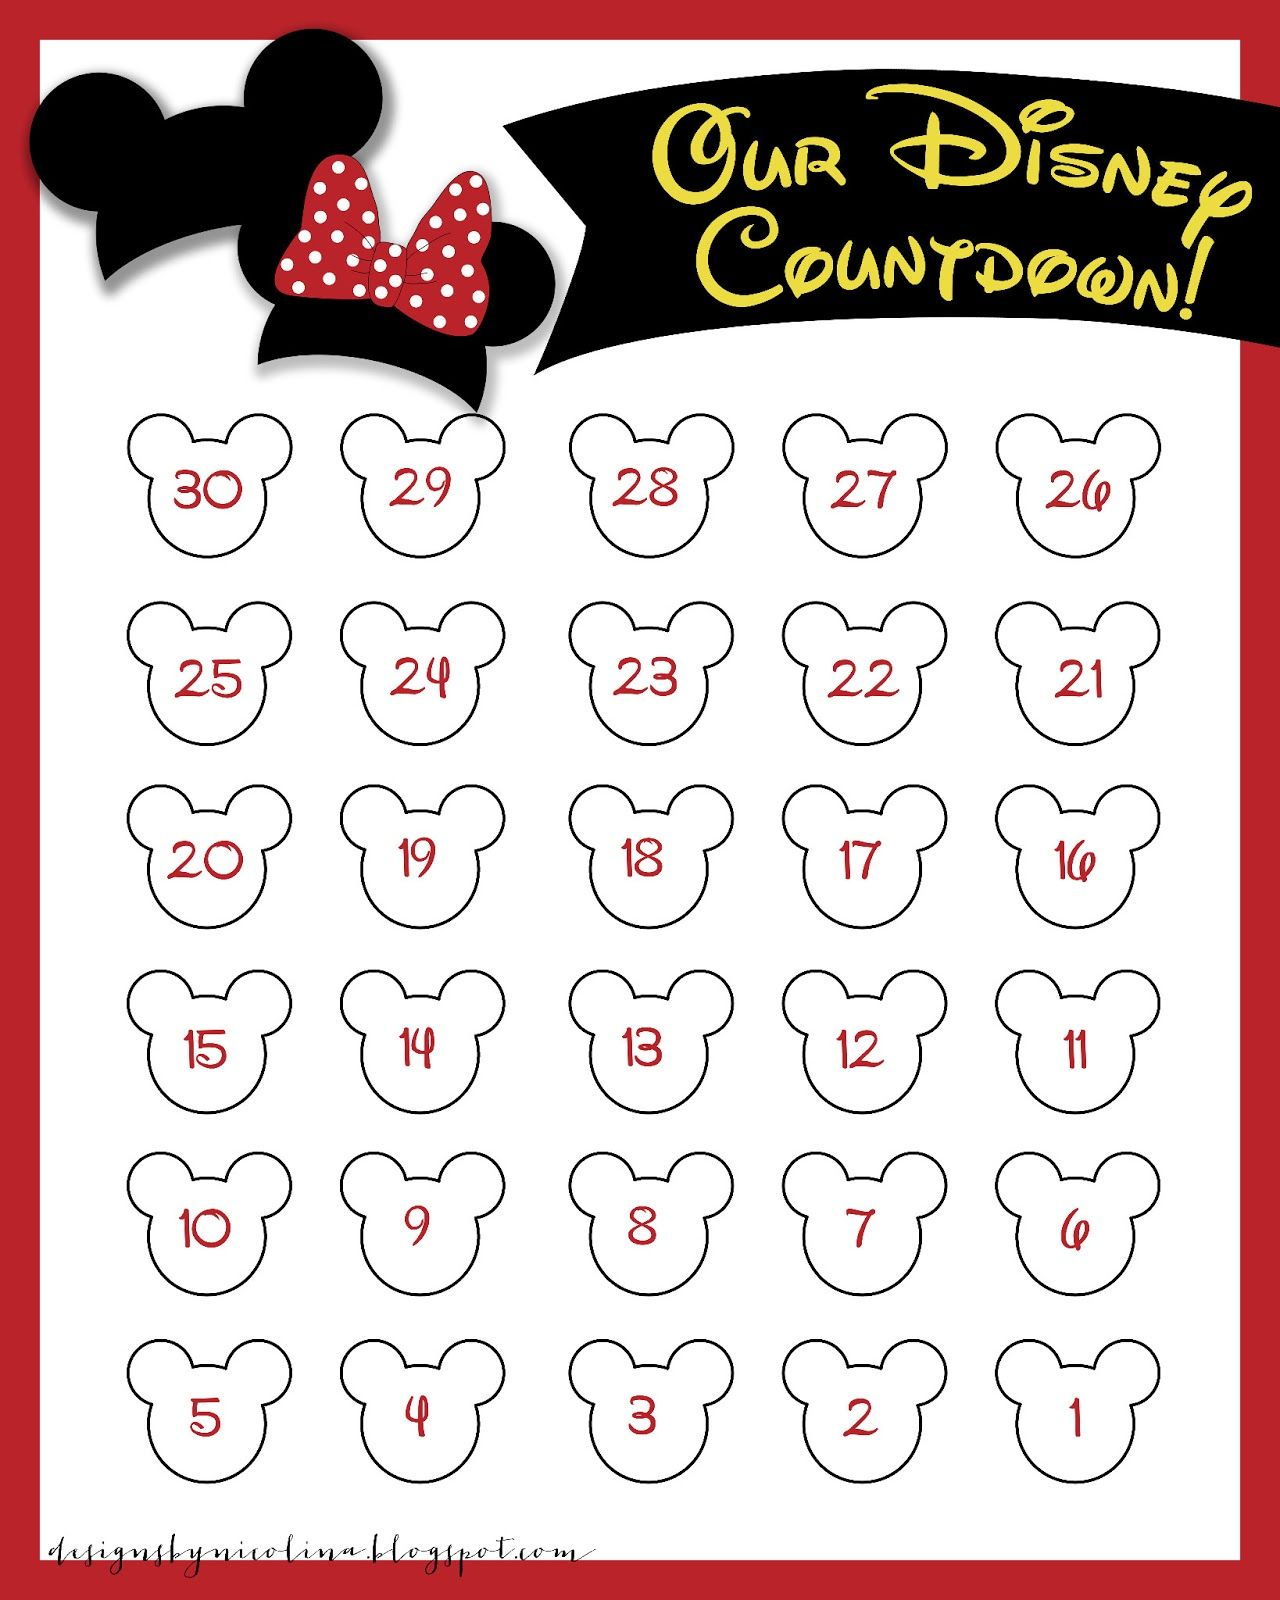 Disneyland Countdown Calendar | Designsnicolina: Disney